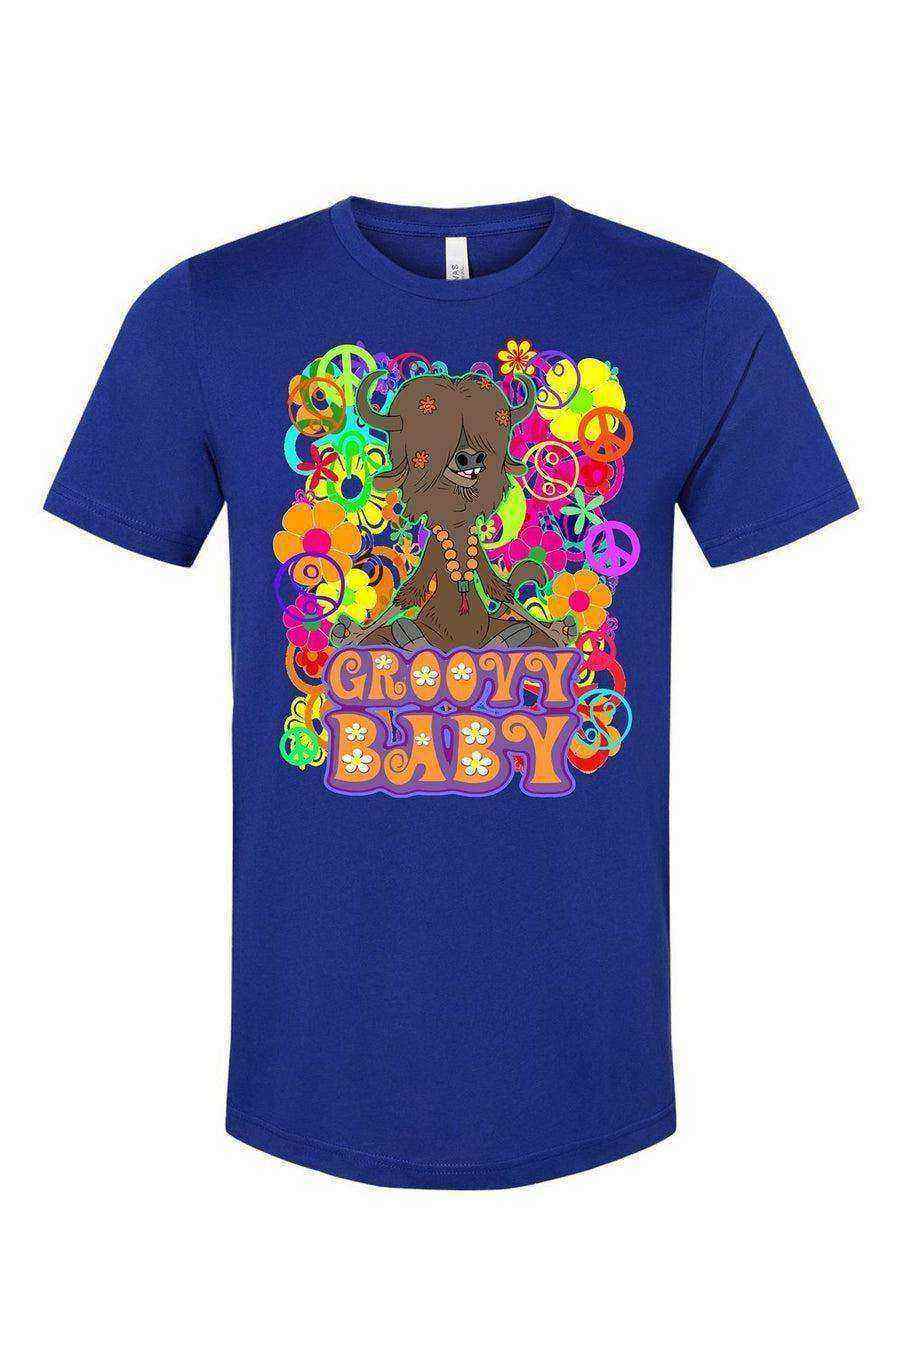 Groovy Yak Yax Shirt | Zootopia Shirt - Dylan's Tees